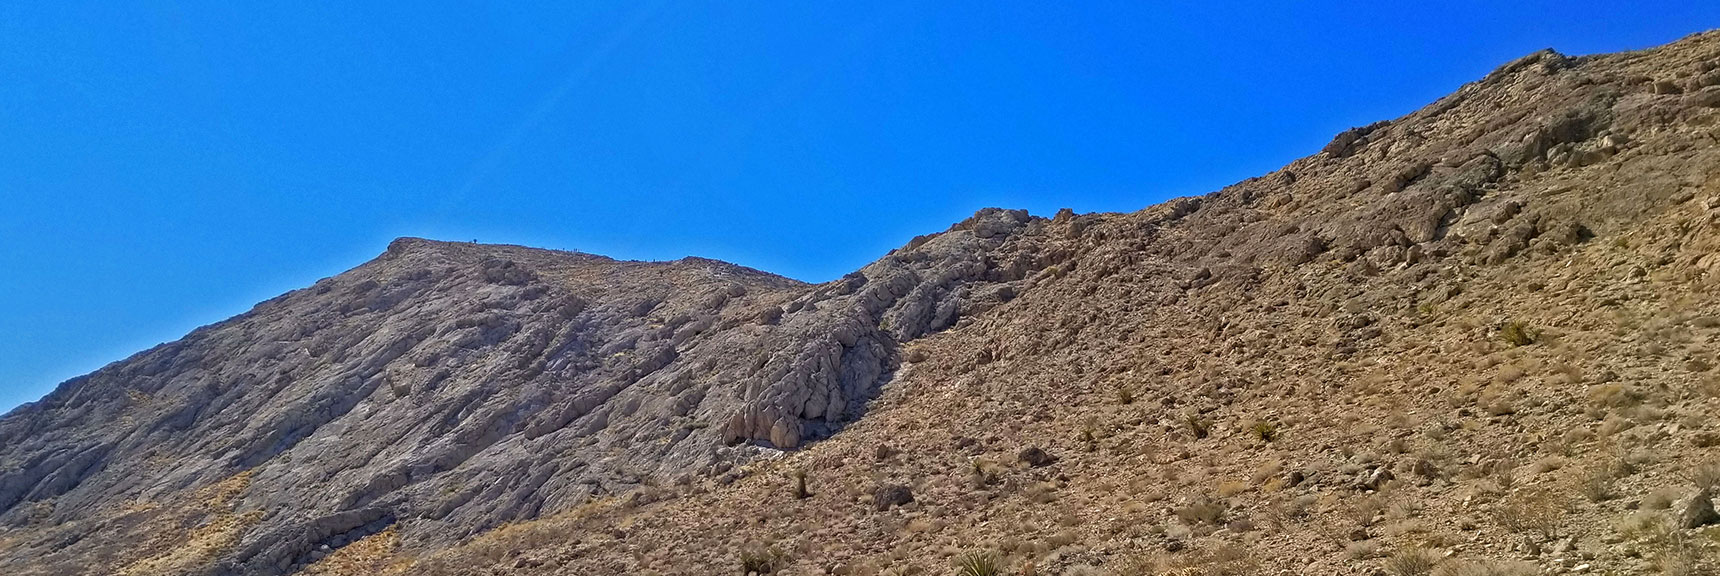 Ascending Toward the Main Summit Ridge to Connect with Main Trail. | Lone Mountain | Las Vegas, Nevada